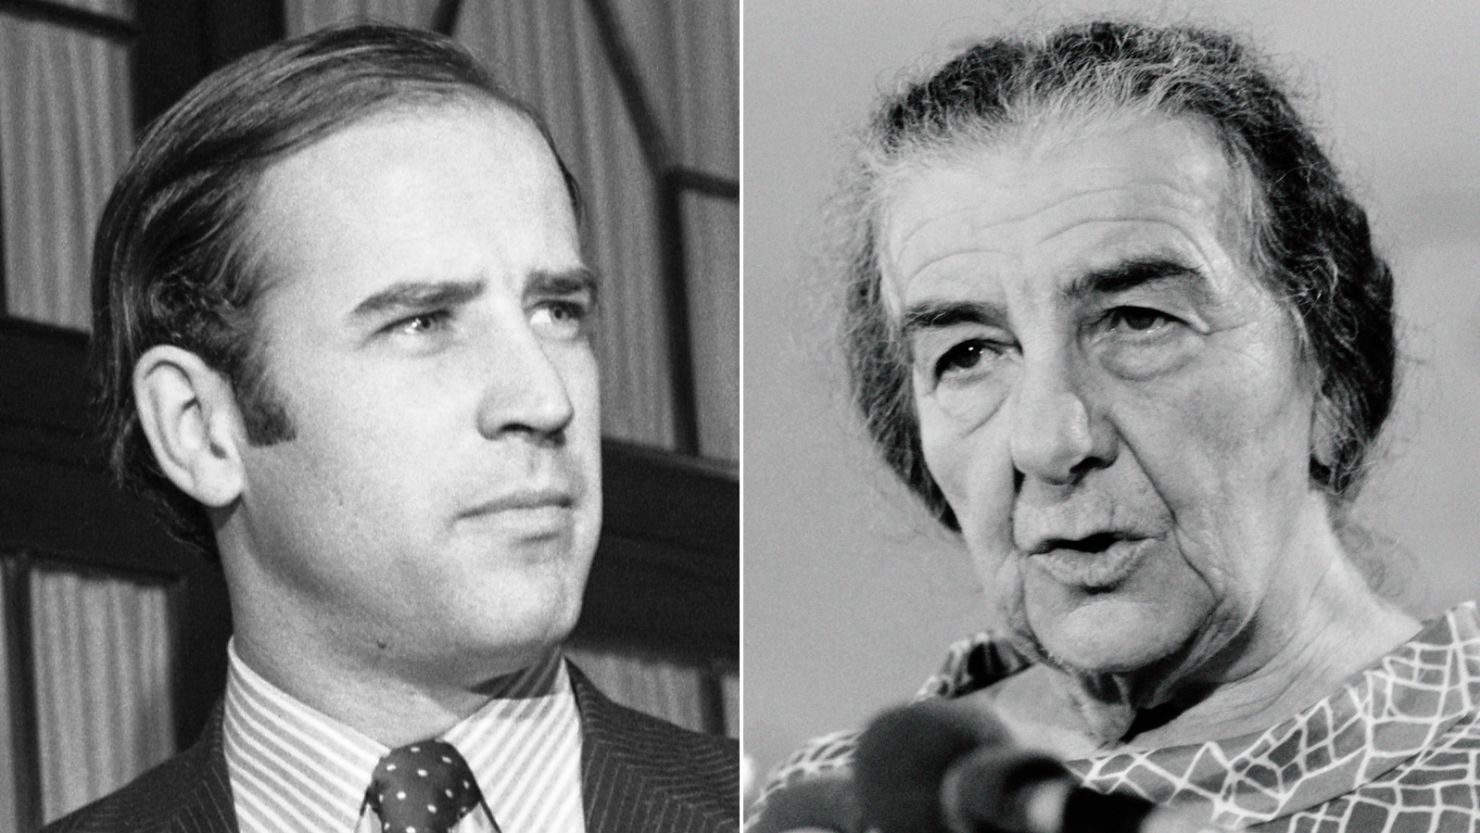 As a young senator in 1973, Joe Biden met with then-Israeli Prime Minister Golda Meir.